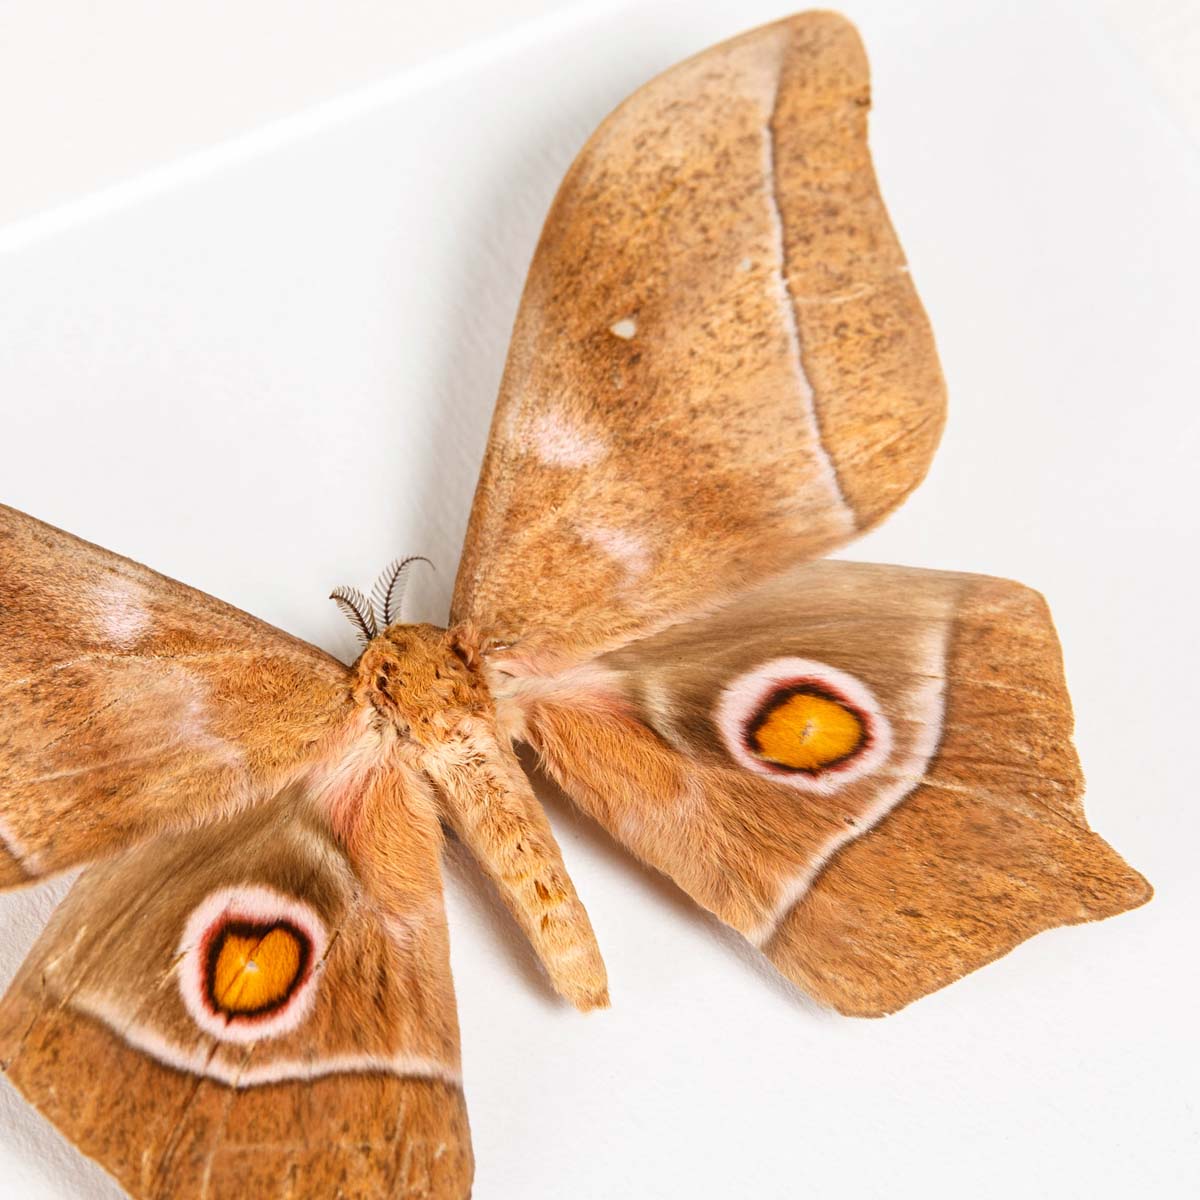 Imbrasia epimethea Moth In Box Frame From Calabar Coast